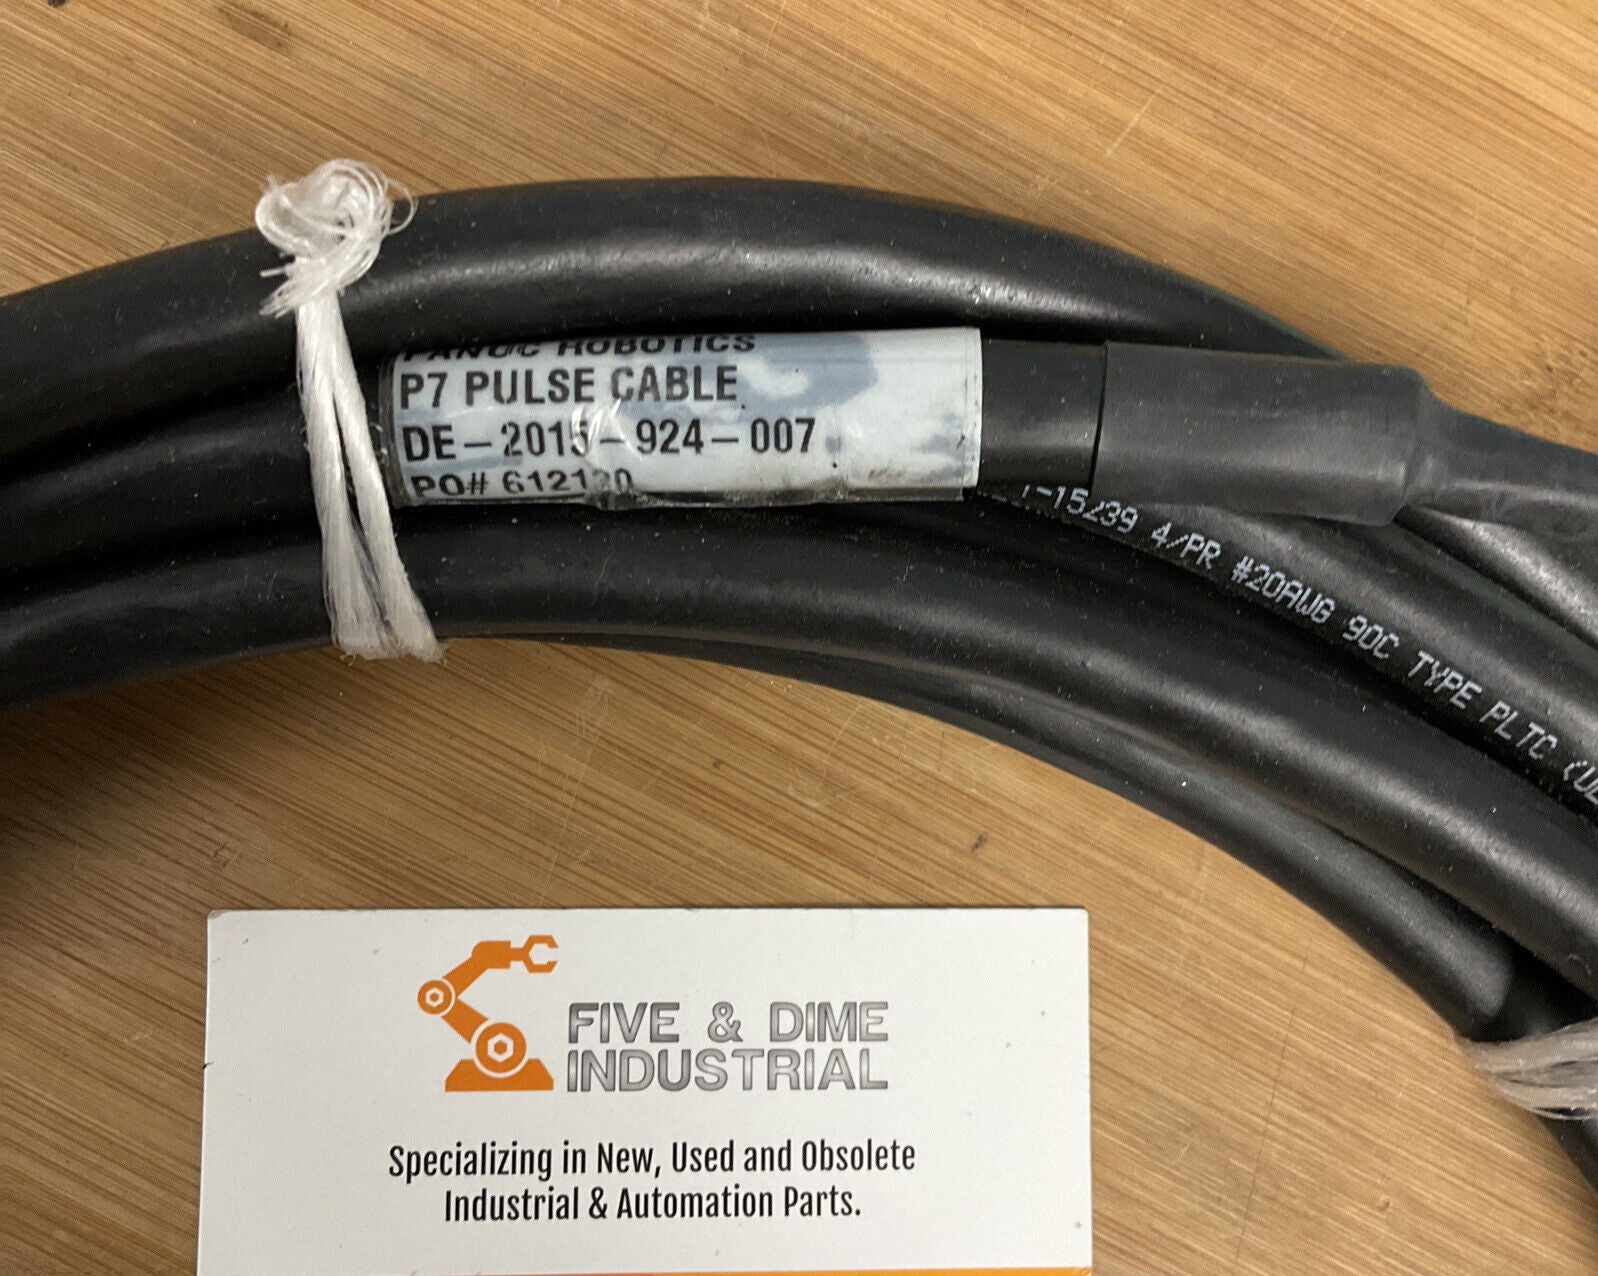 Fanuc DE-2015-924-007 P7 Pulse Cable Rev. C  7 Meters (CBL103)